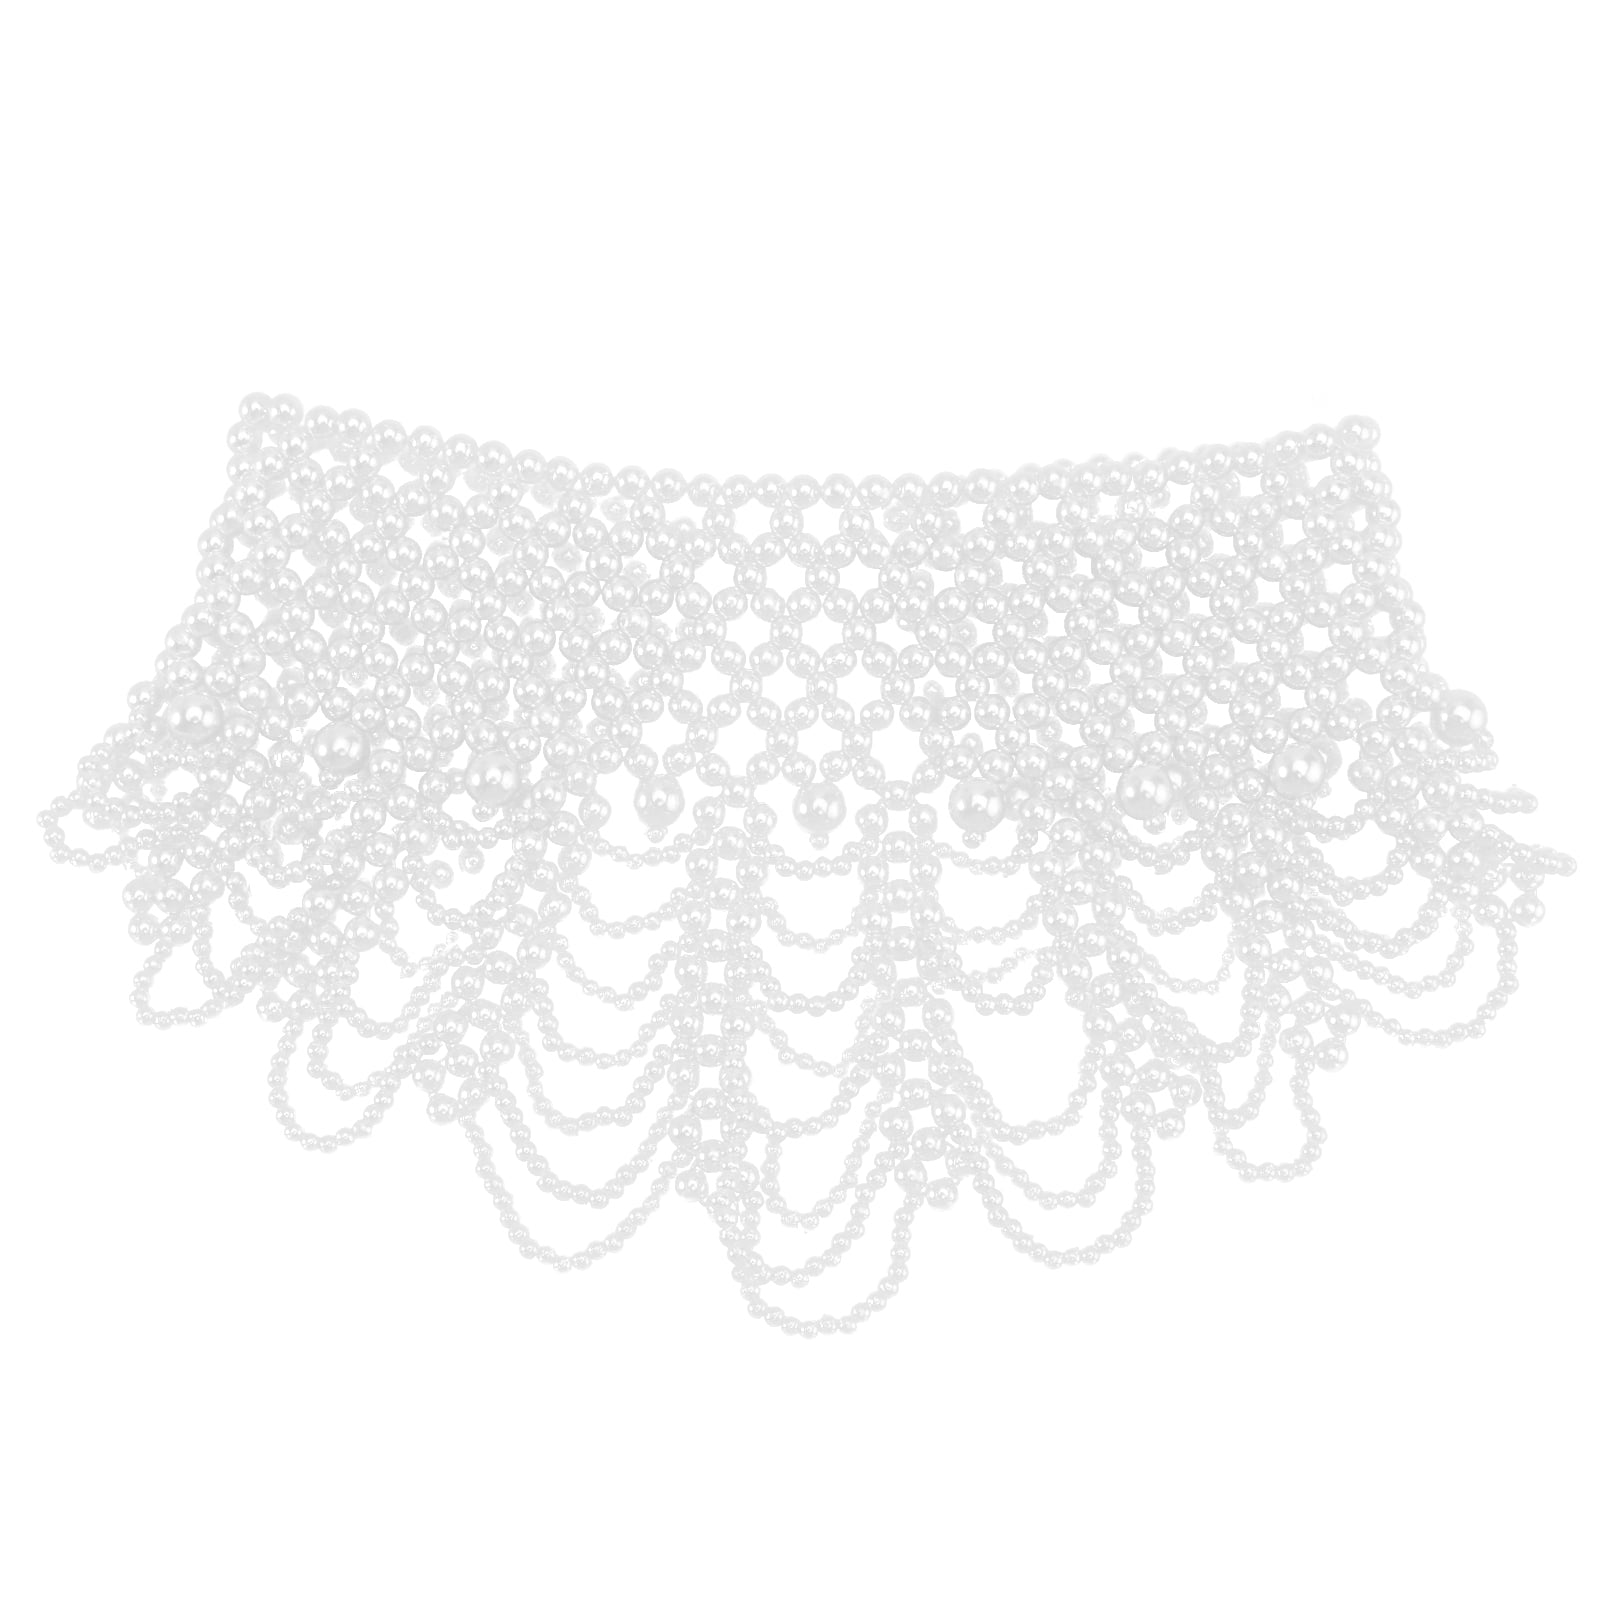 Wide Black Lace Choker Boho Crochet Adjustable Necklace Gothic Jewelry